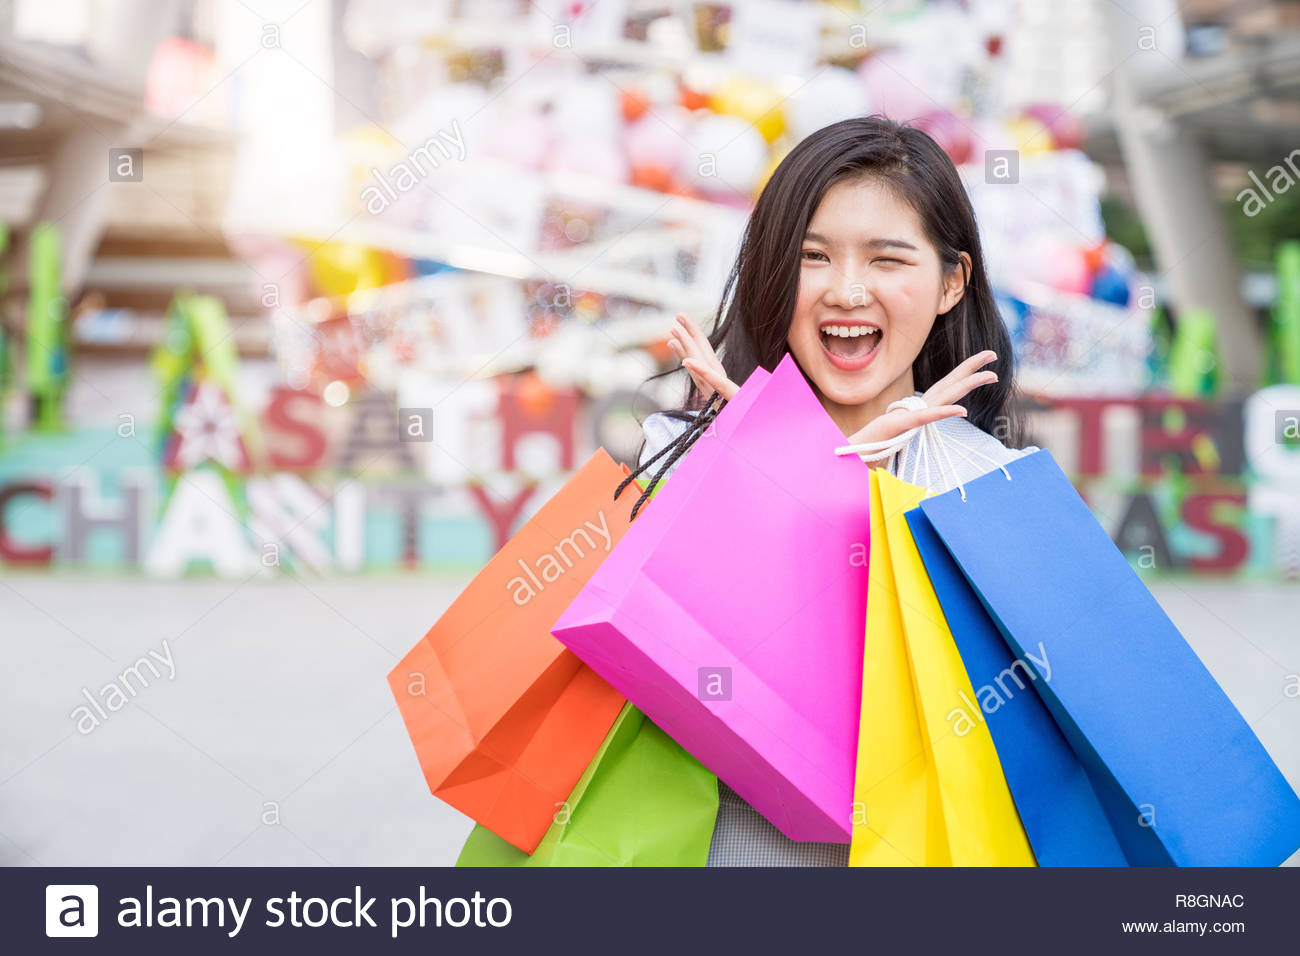 consumerism happiness